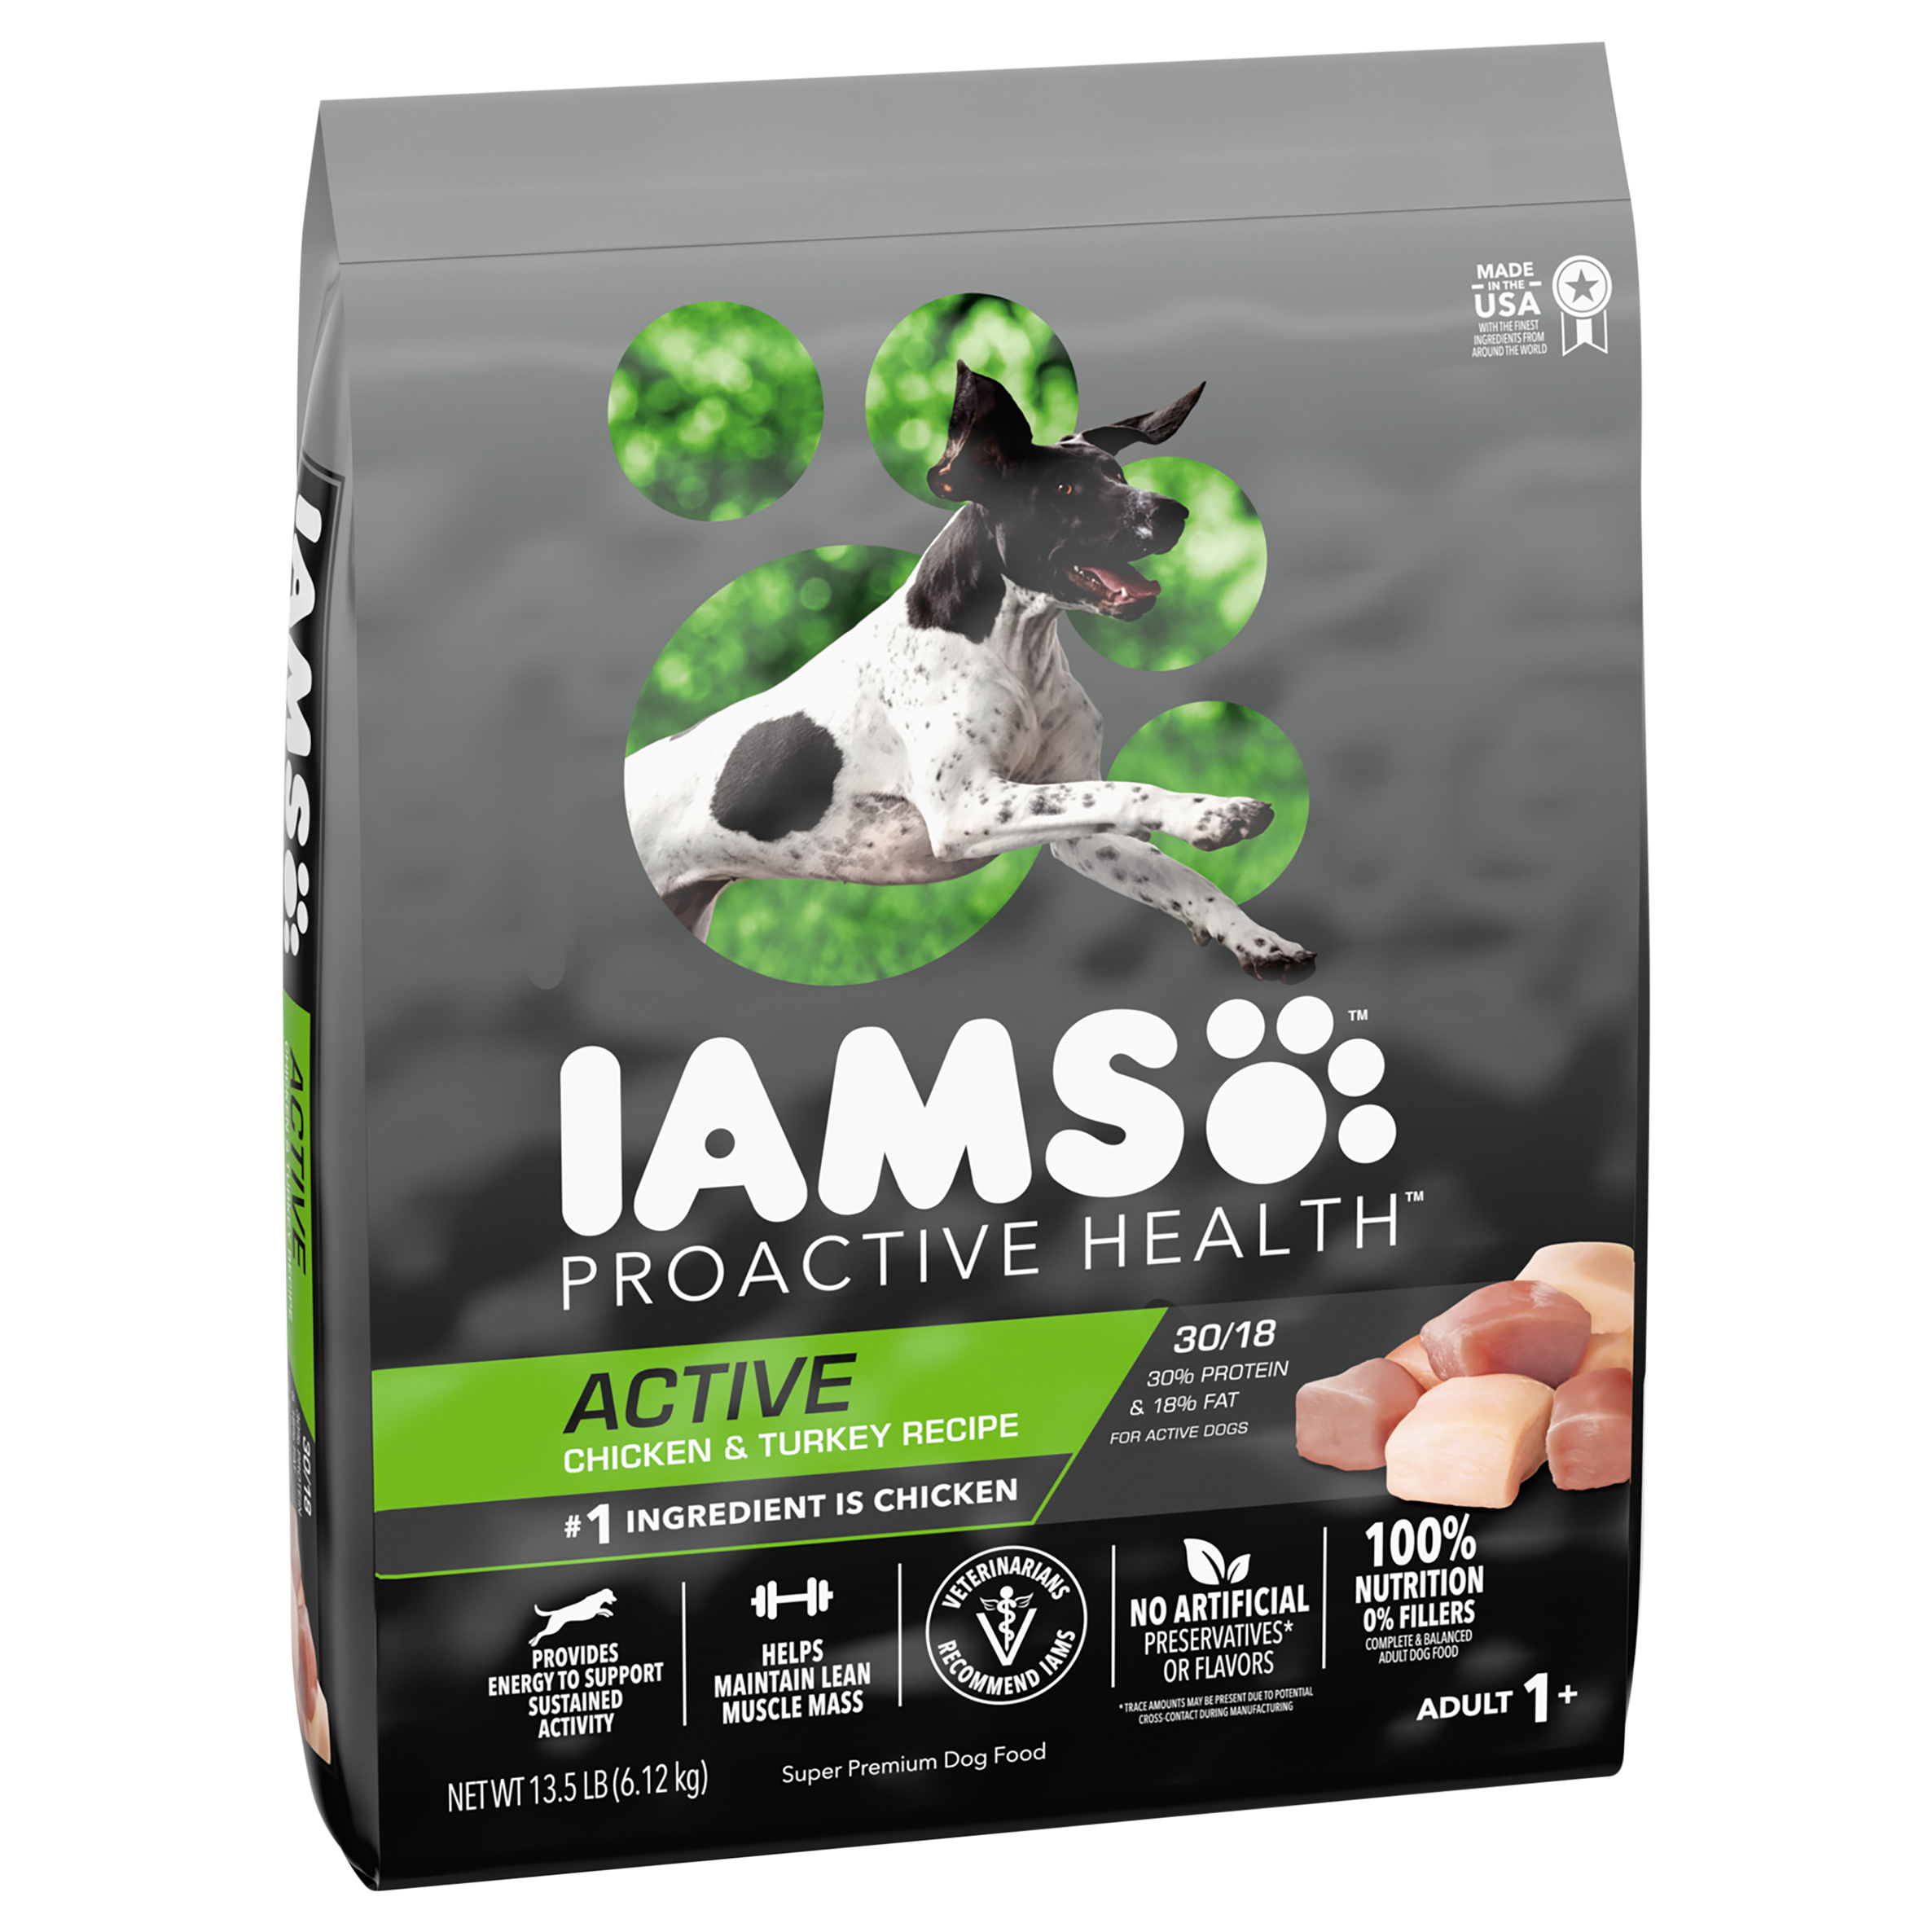 is iams dog food safe